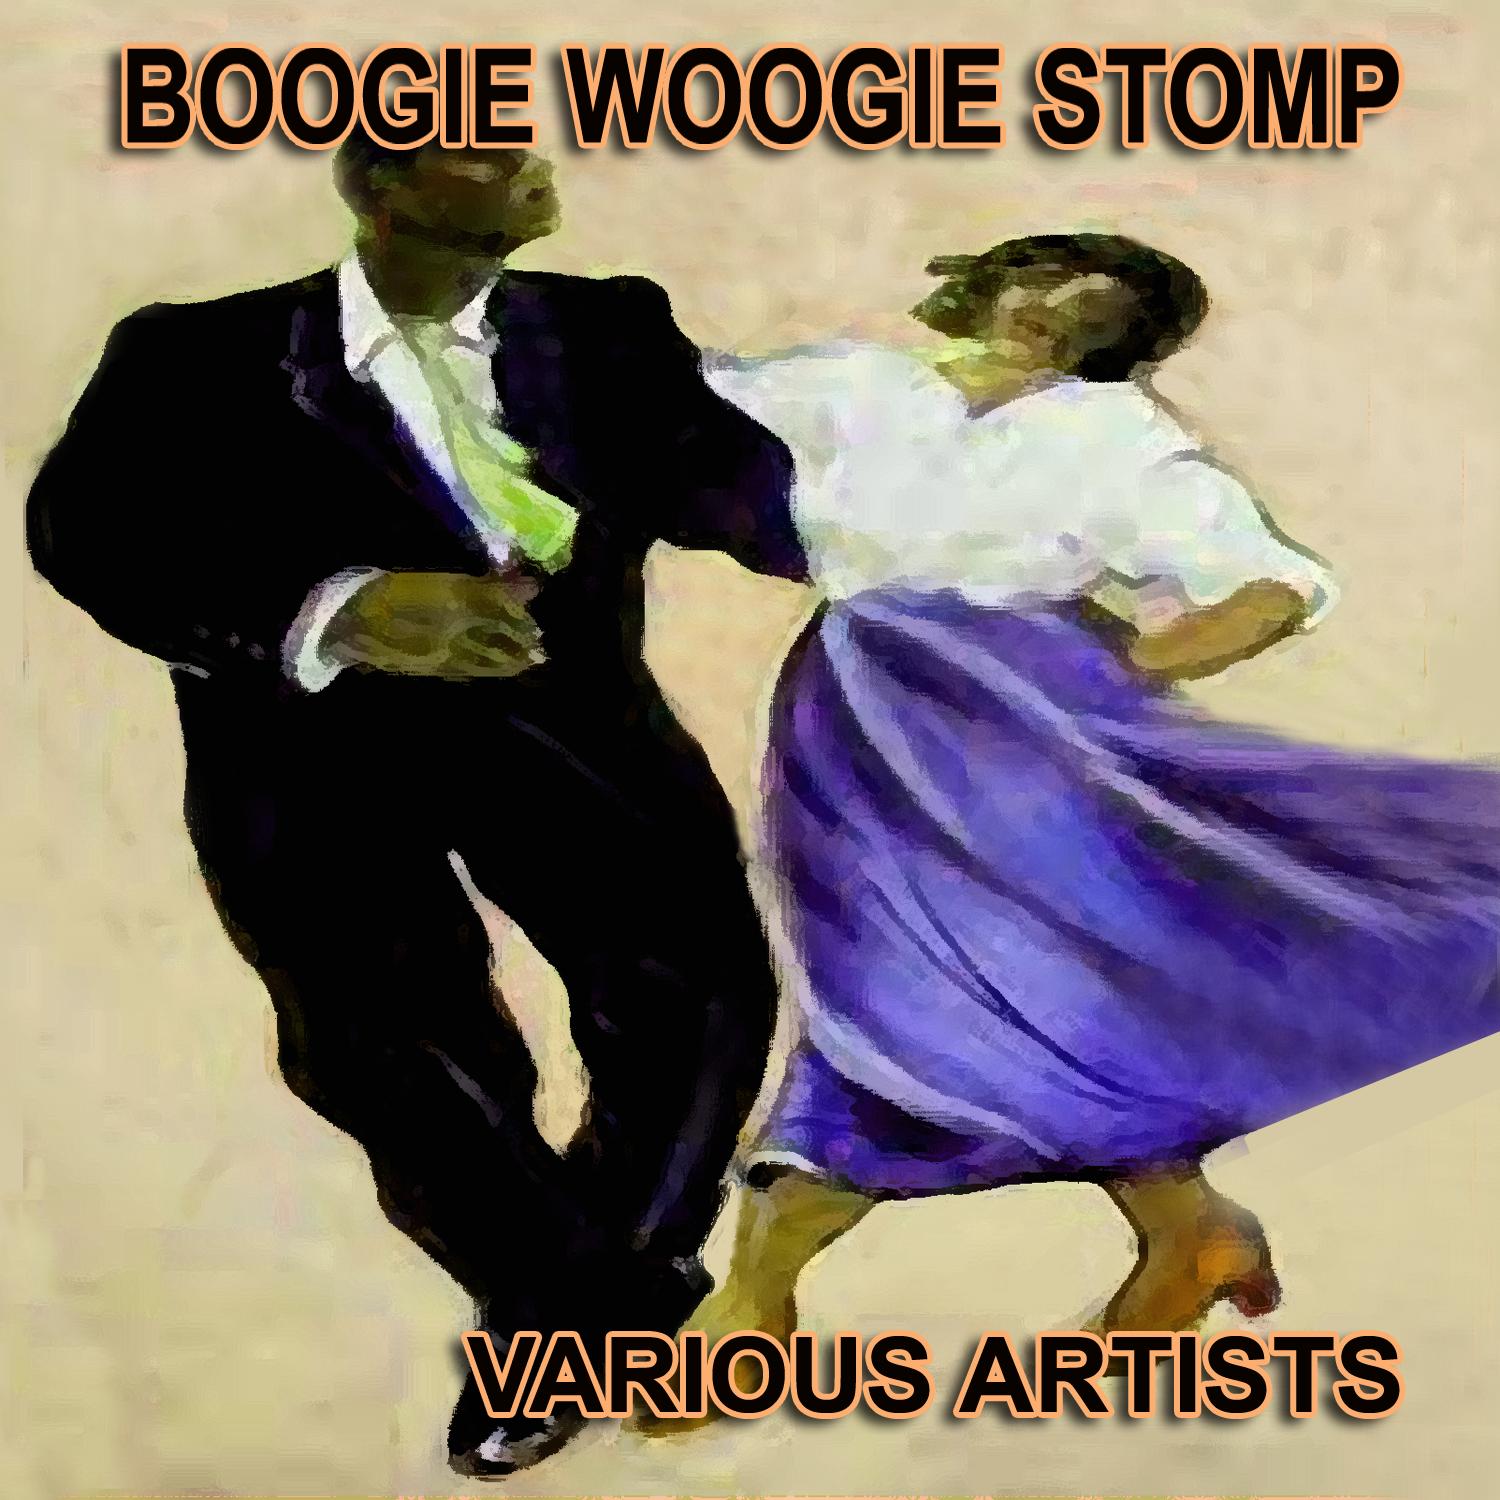 Chip's Boogie Woogie